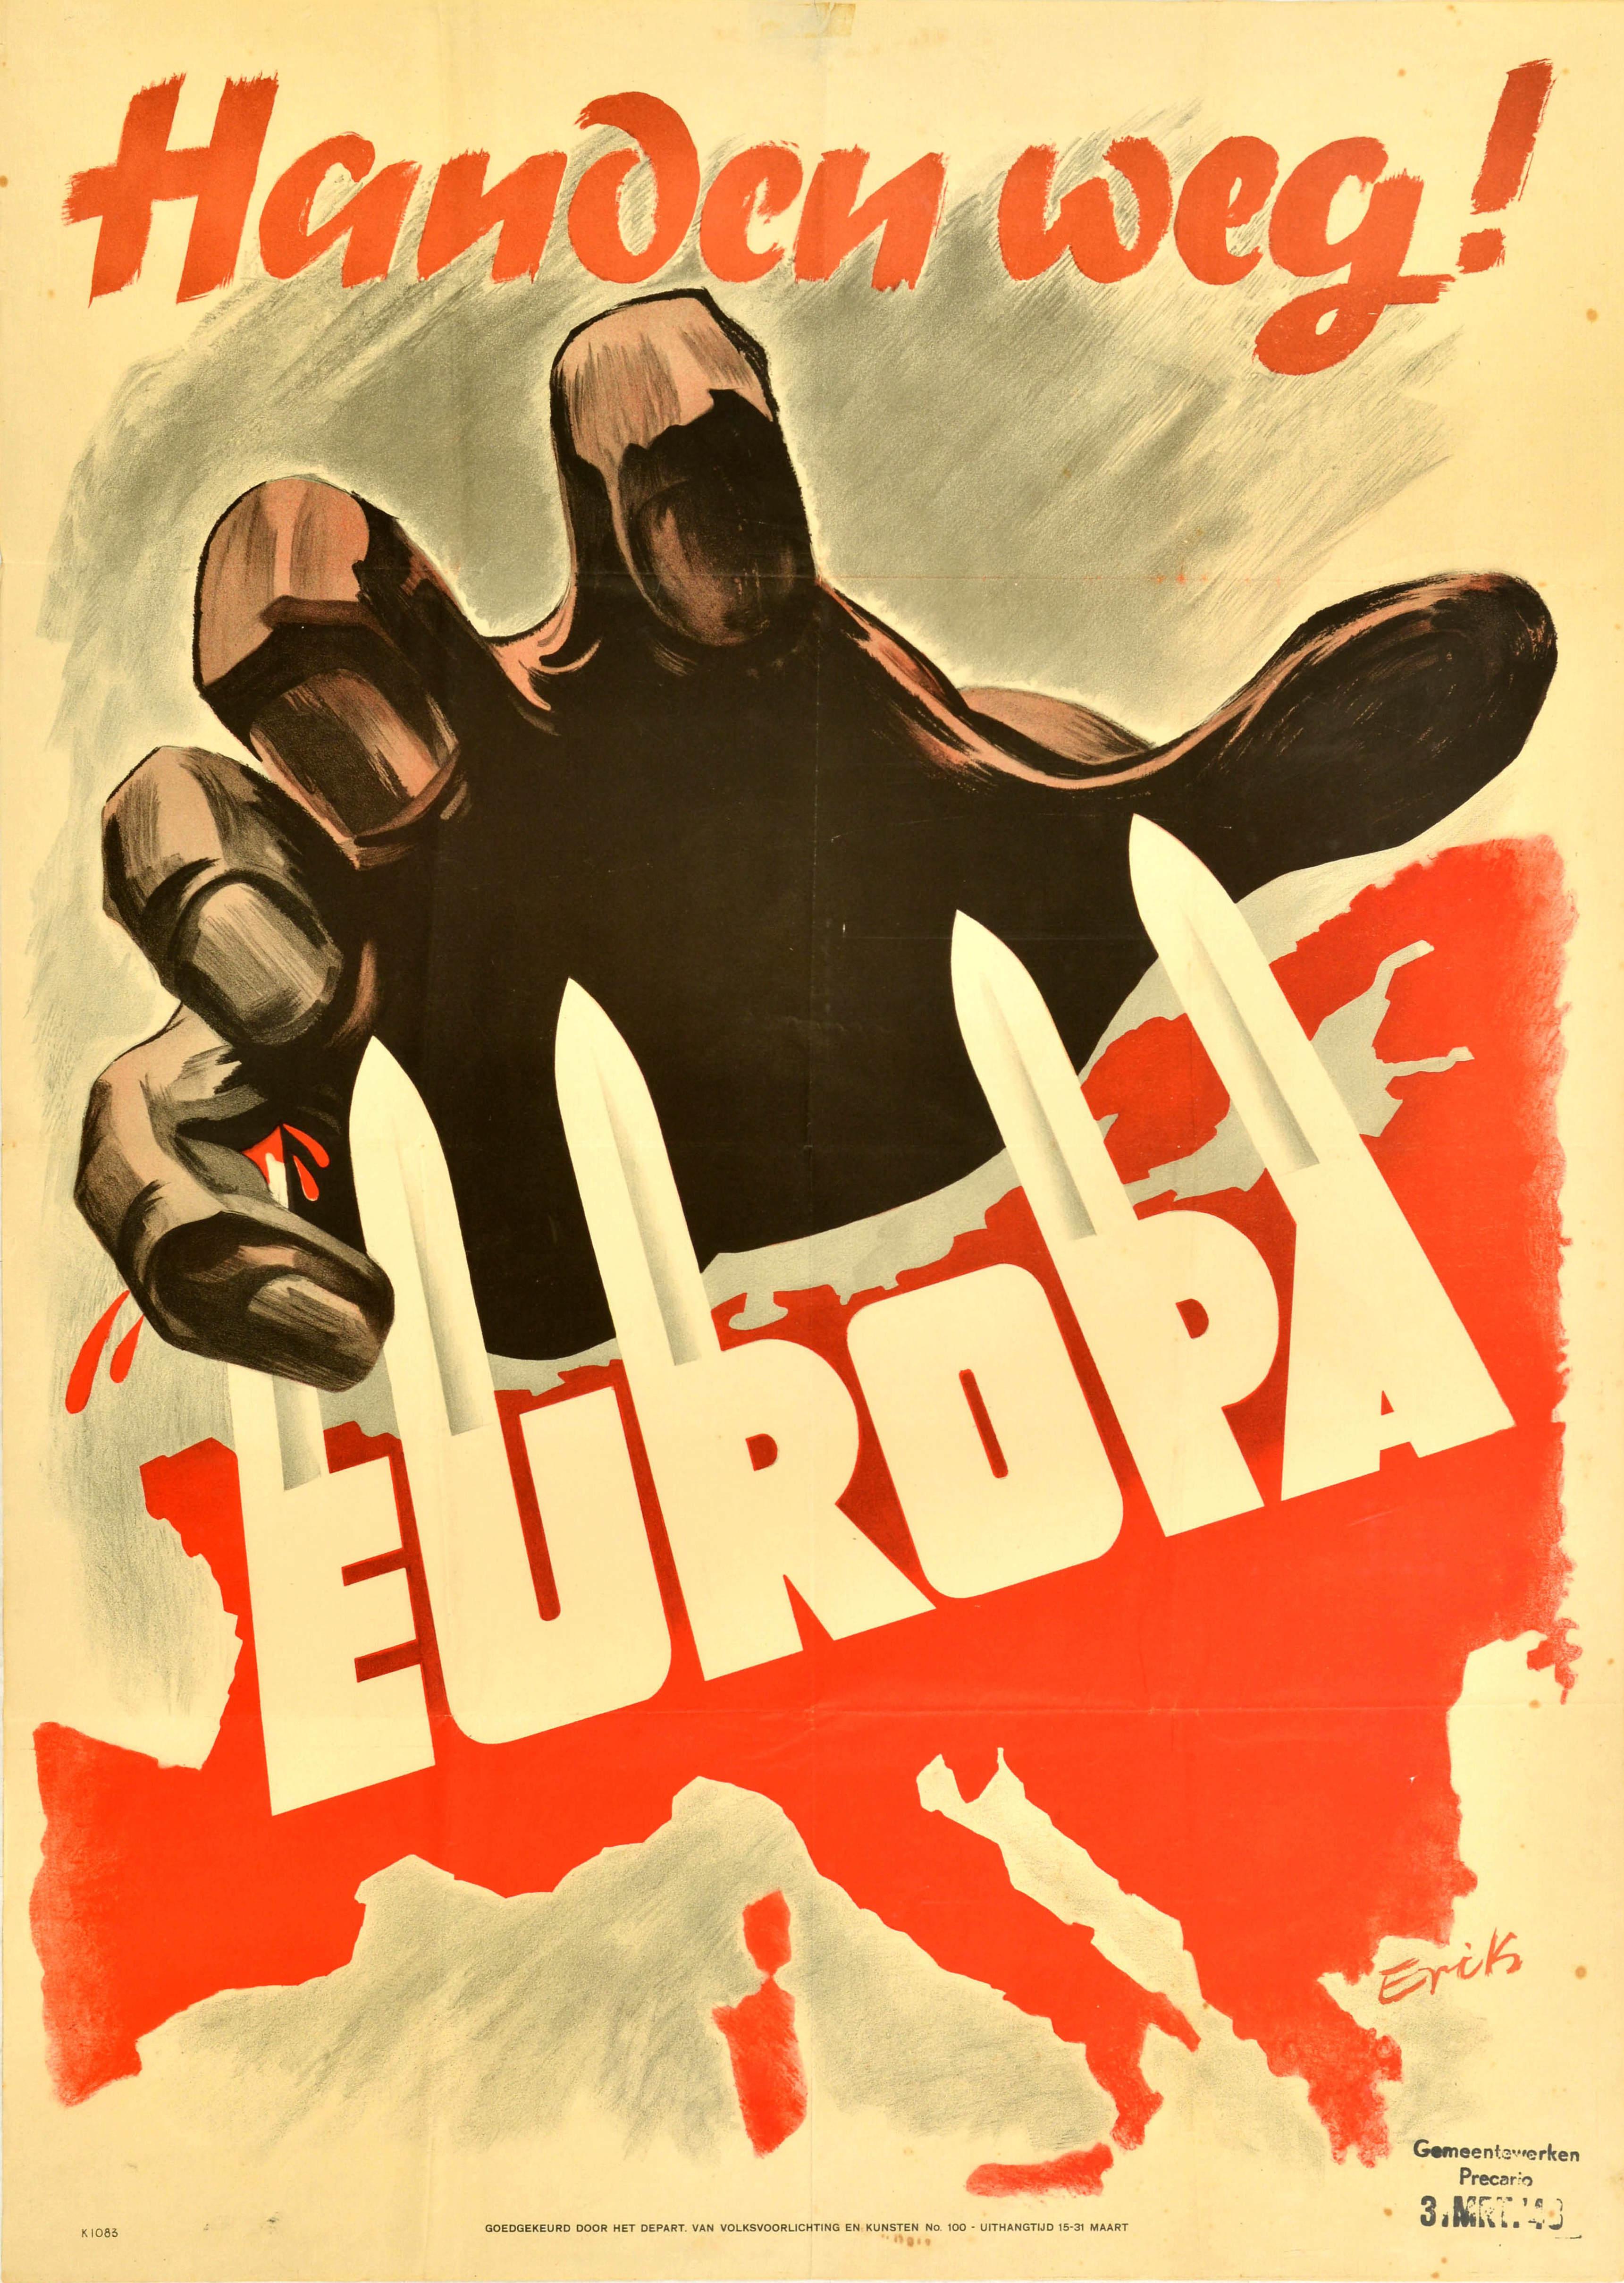 Erik Print - Original Vintage WWII Poster Handen Weg! Europa Hands Off Europe War Netherlands